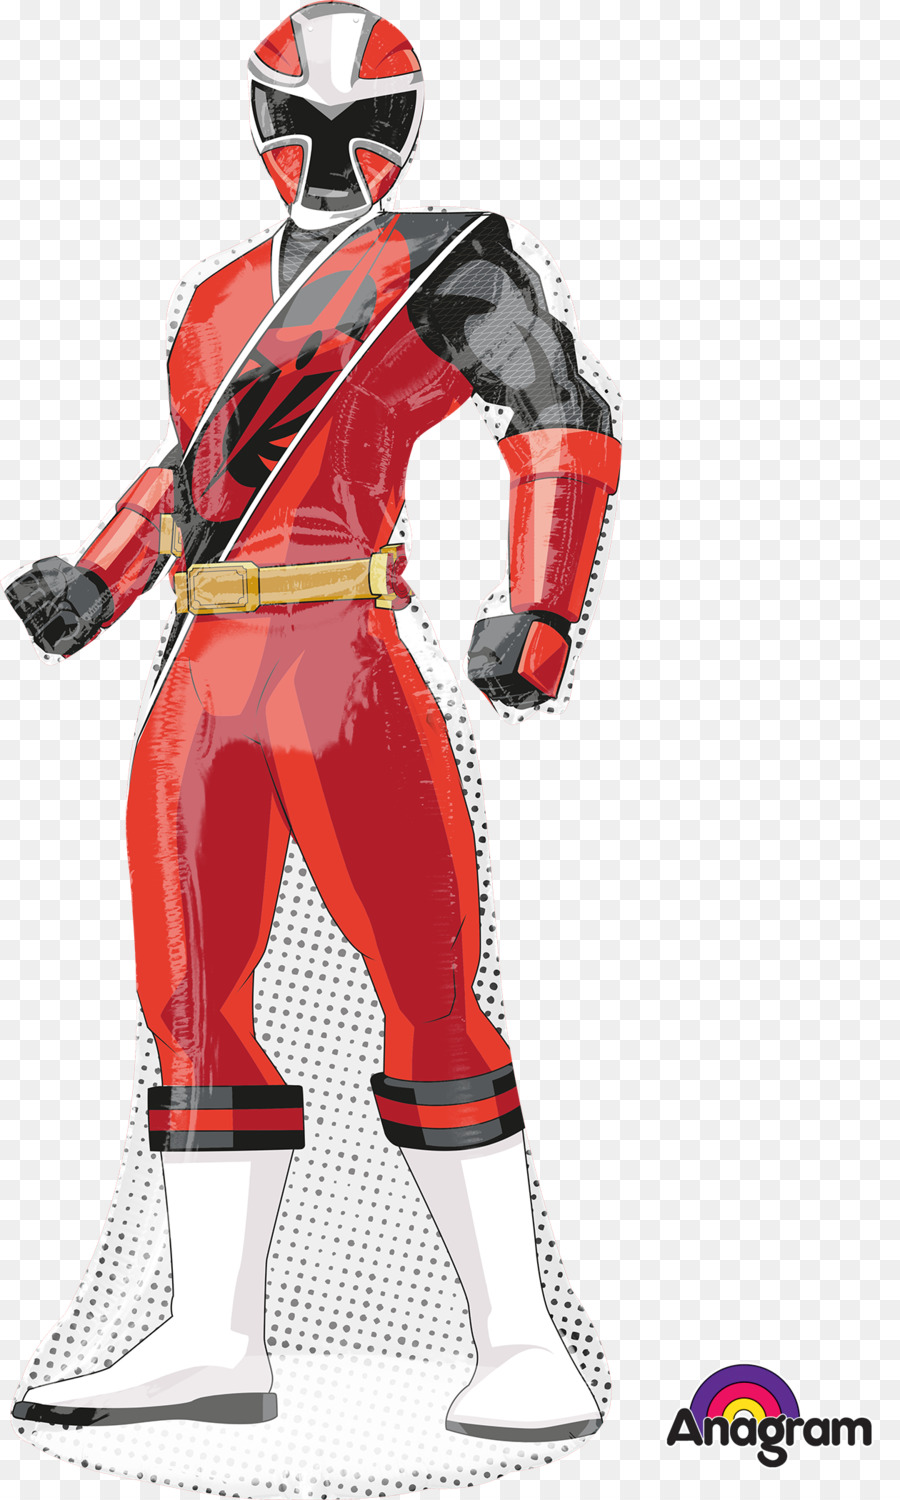 Red Ranger Power Rangers Ninja Acciaio Palloncino Compleanno - Power Rangers